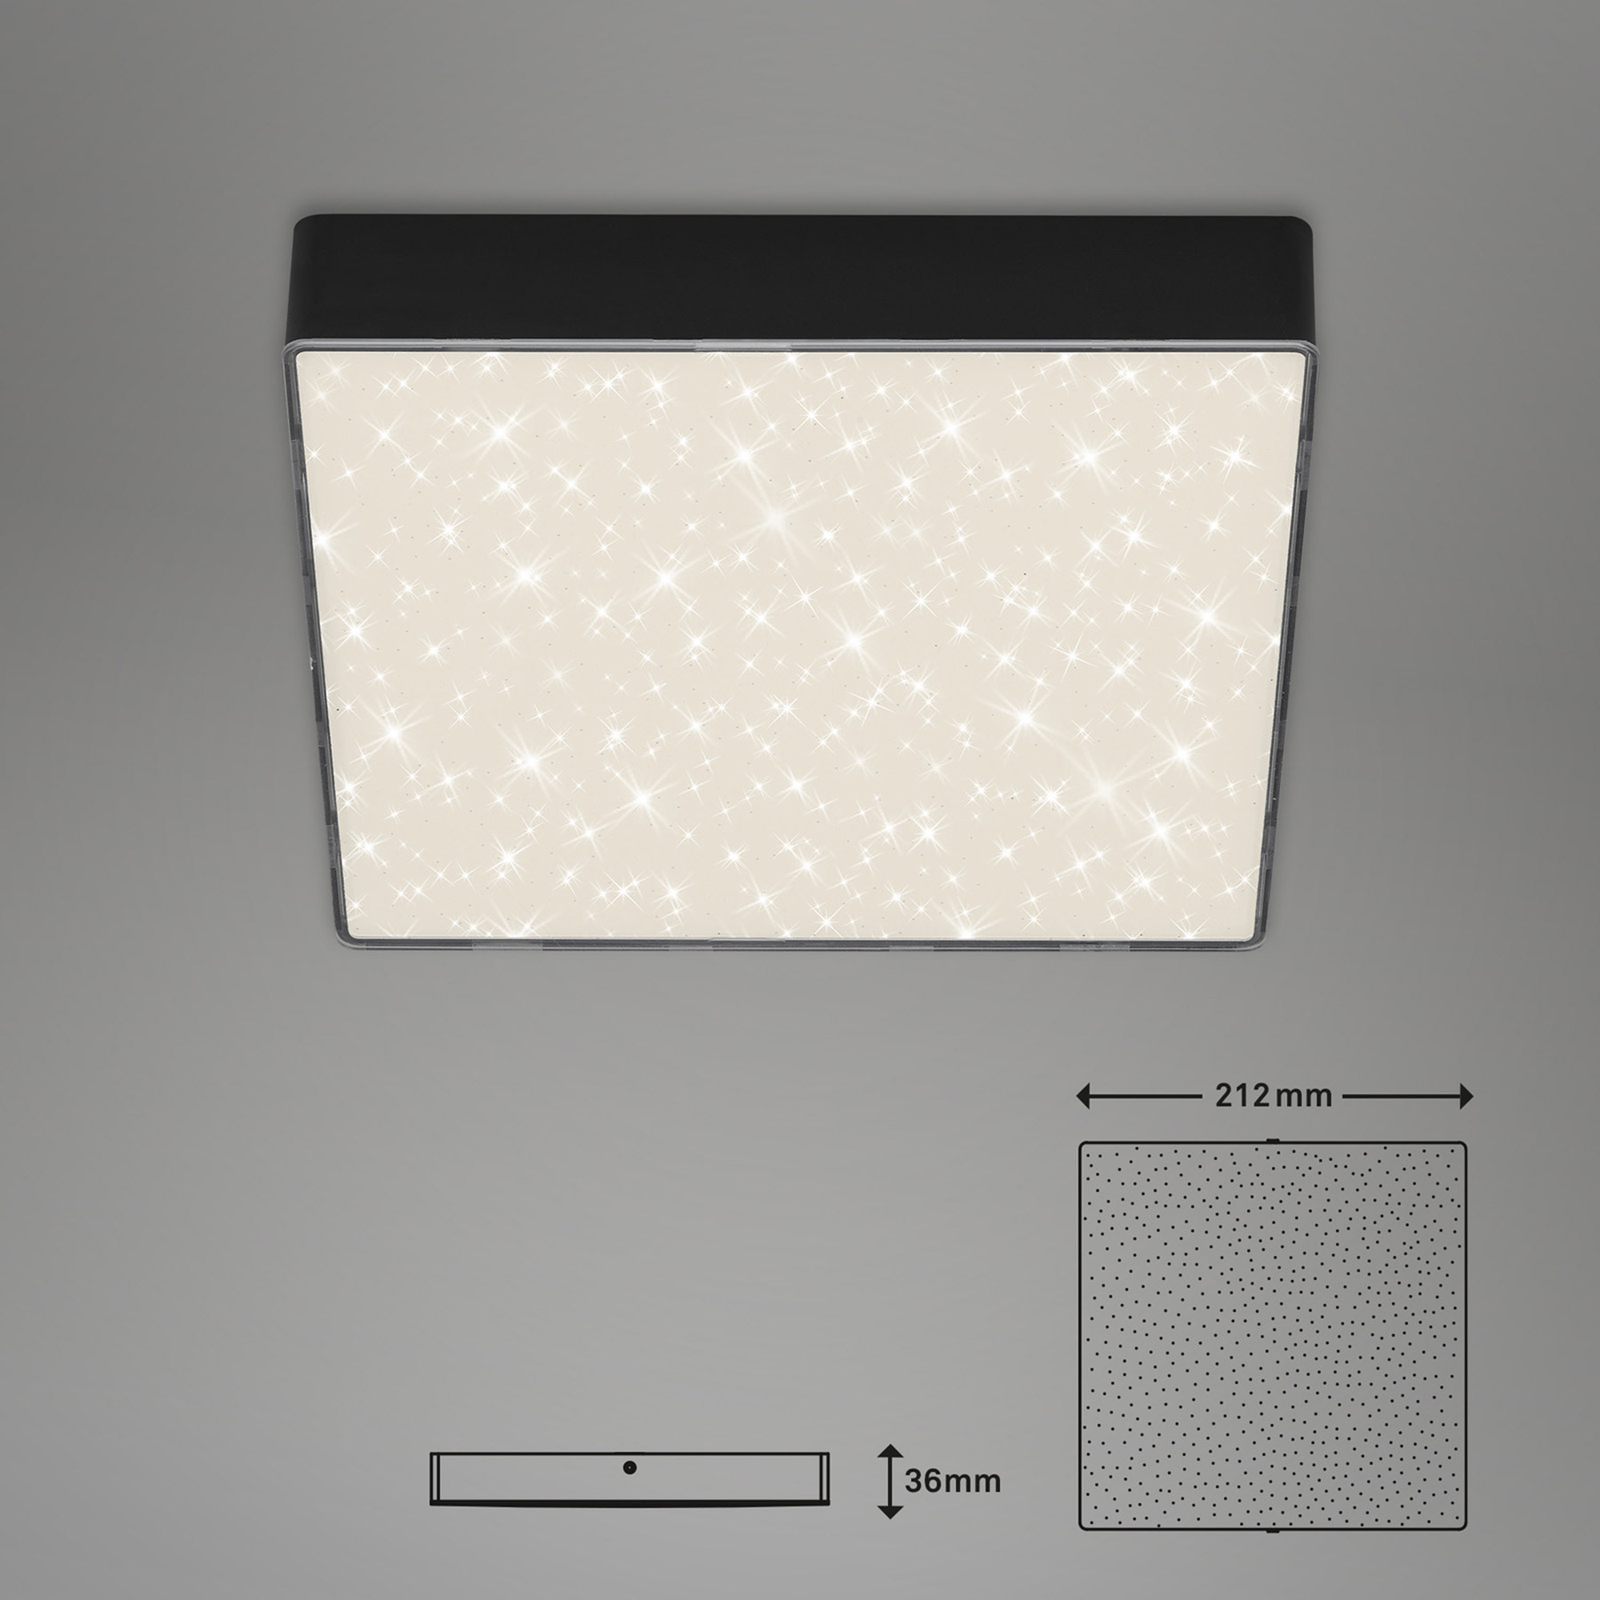 LED plafondlamp Flame Star, 21,2 x 21,2 cm zwart